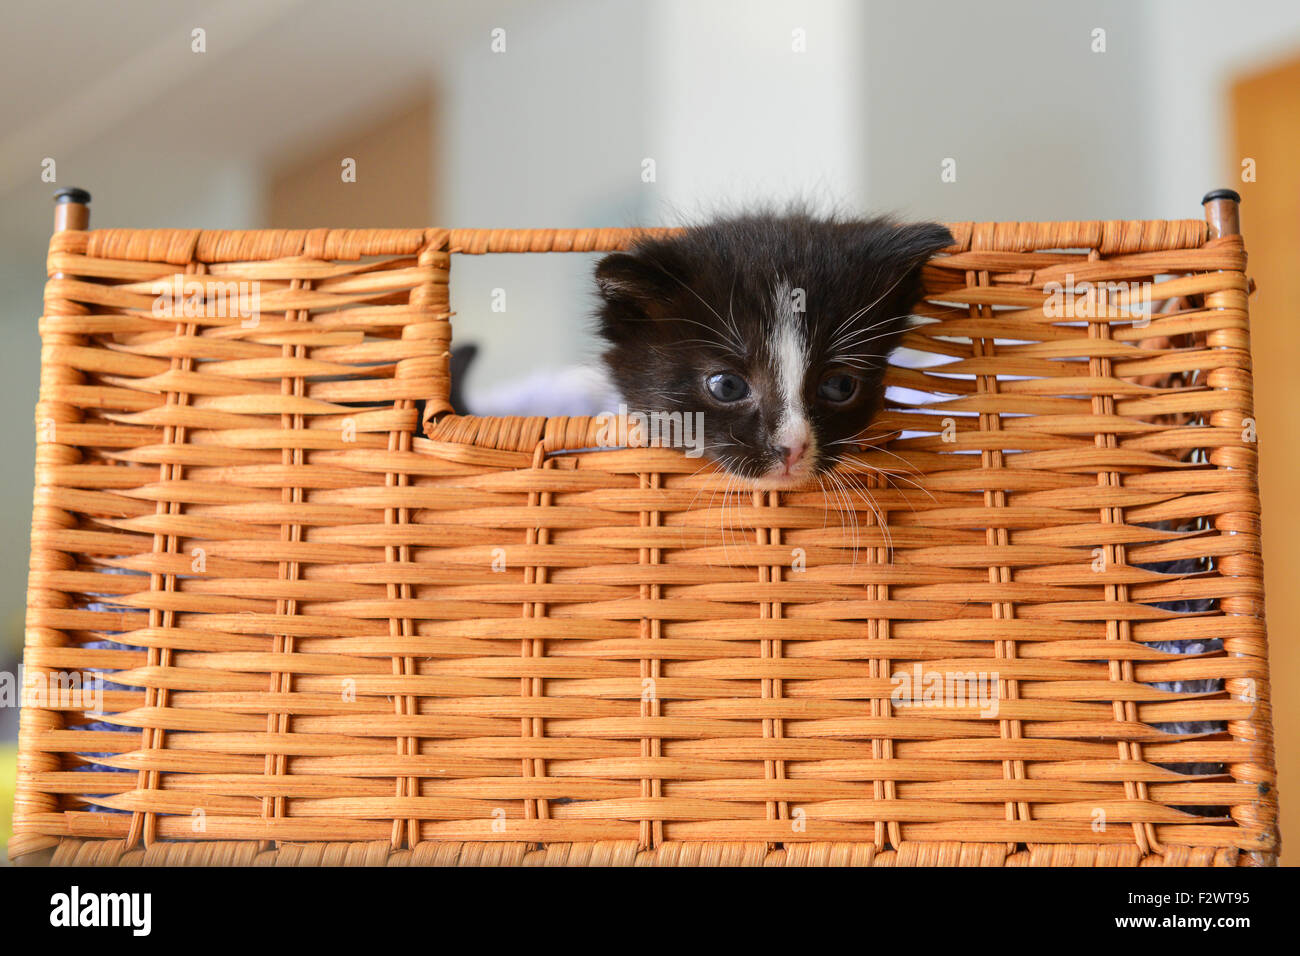 Inquisitive cute kitten peering out of basket kittens playfull cat uk Stock Photo